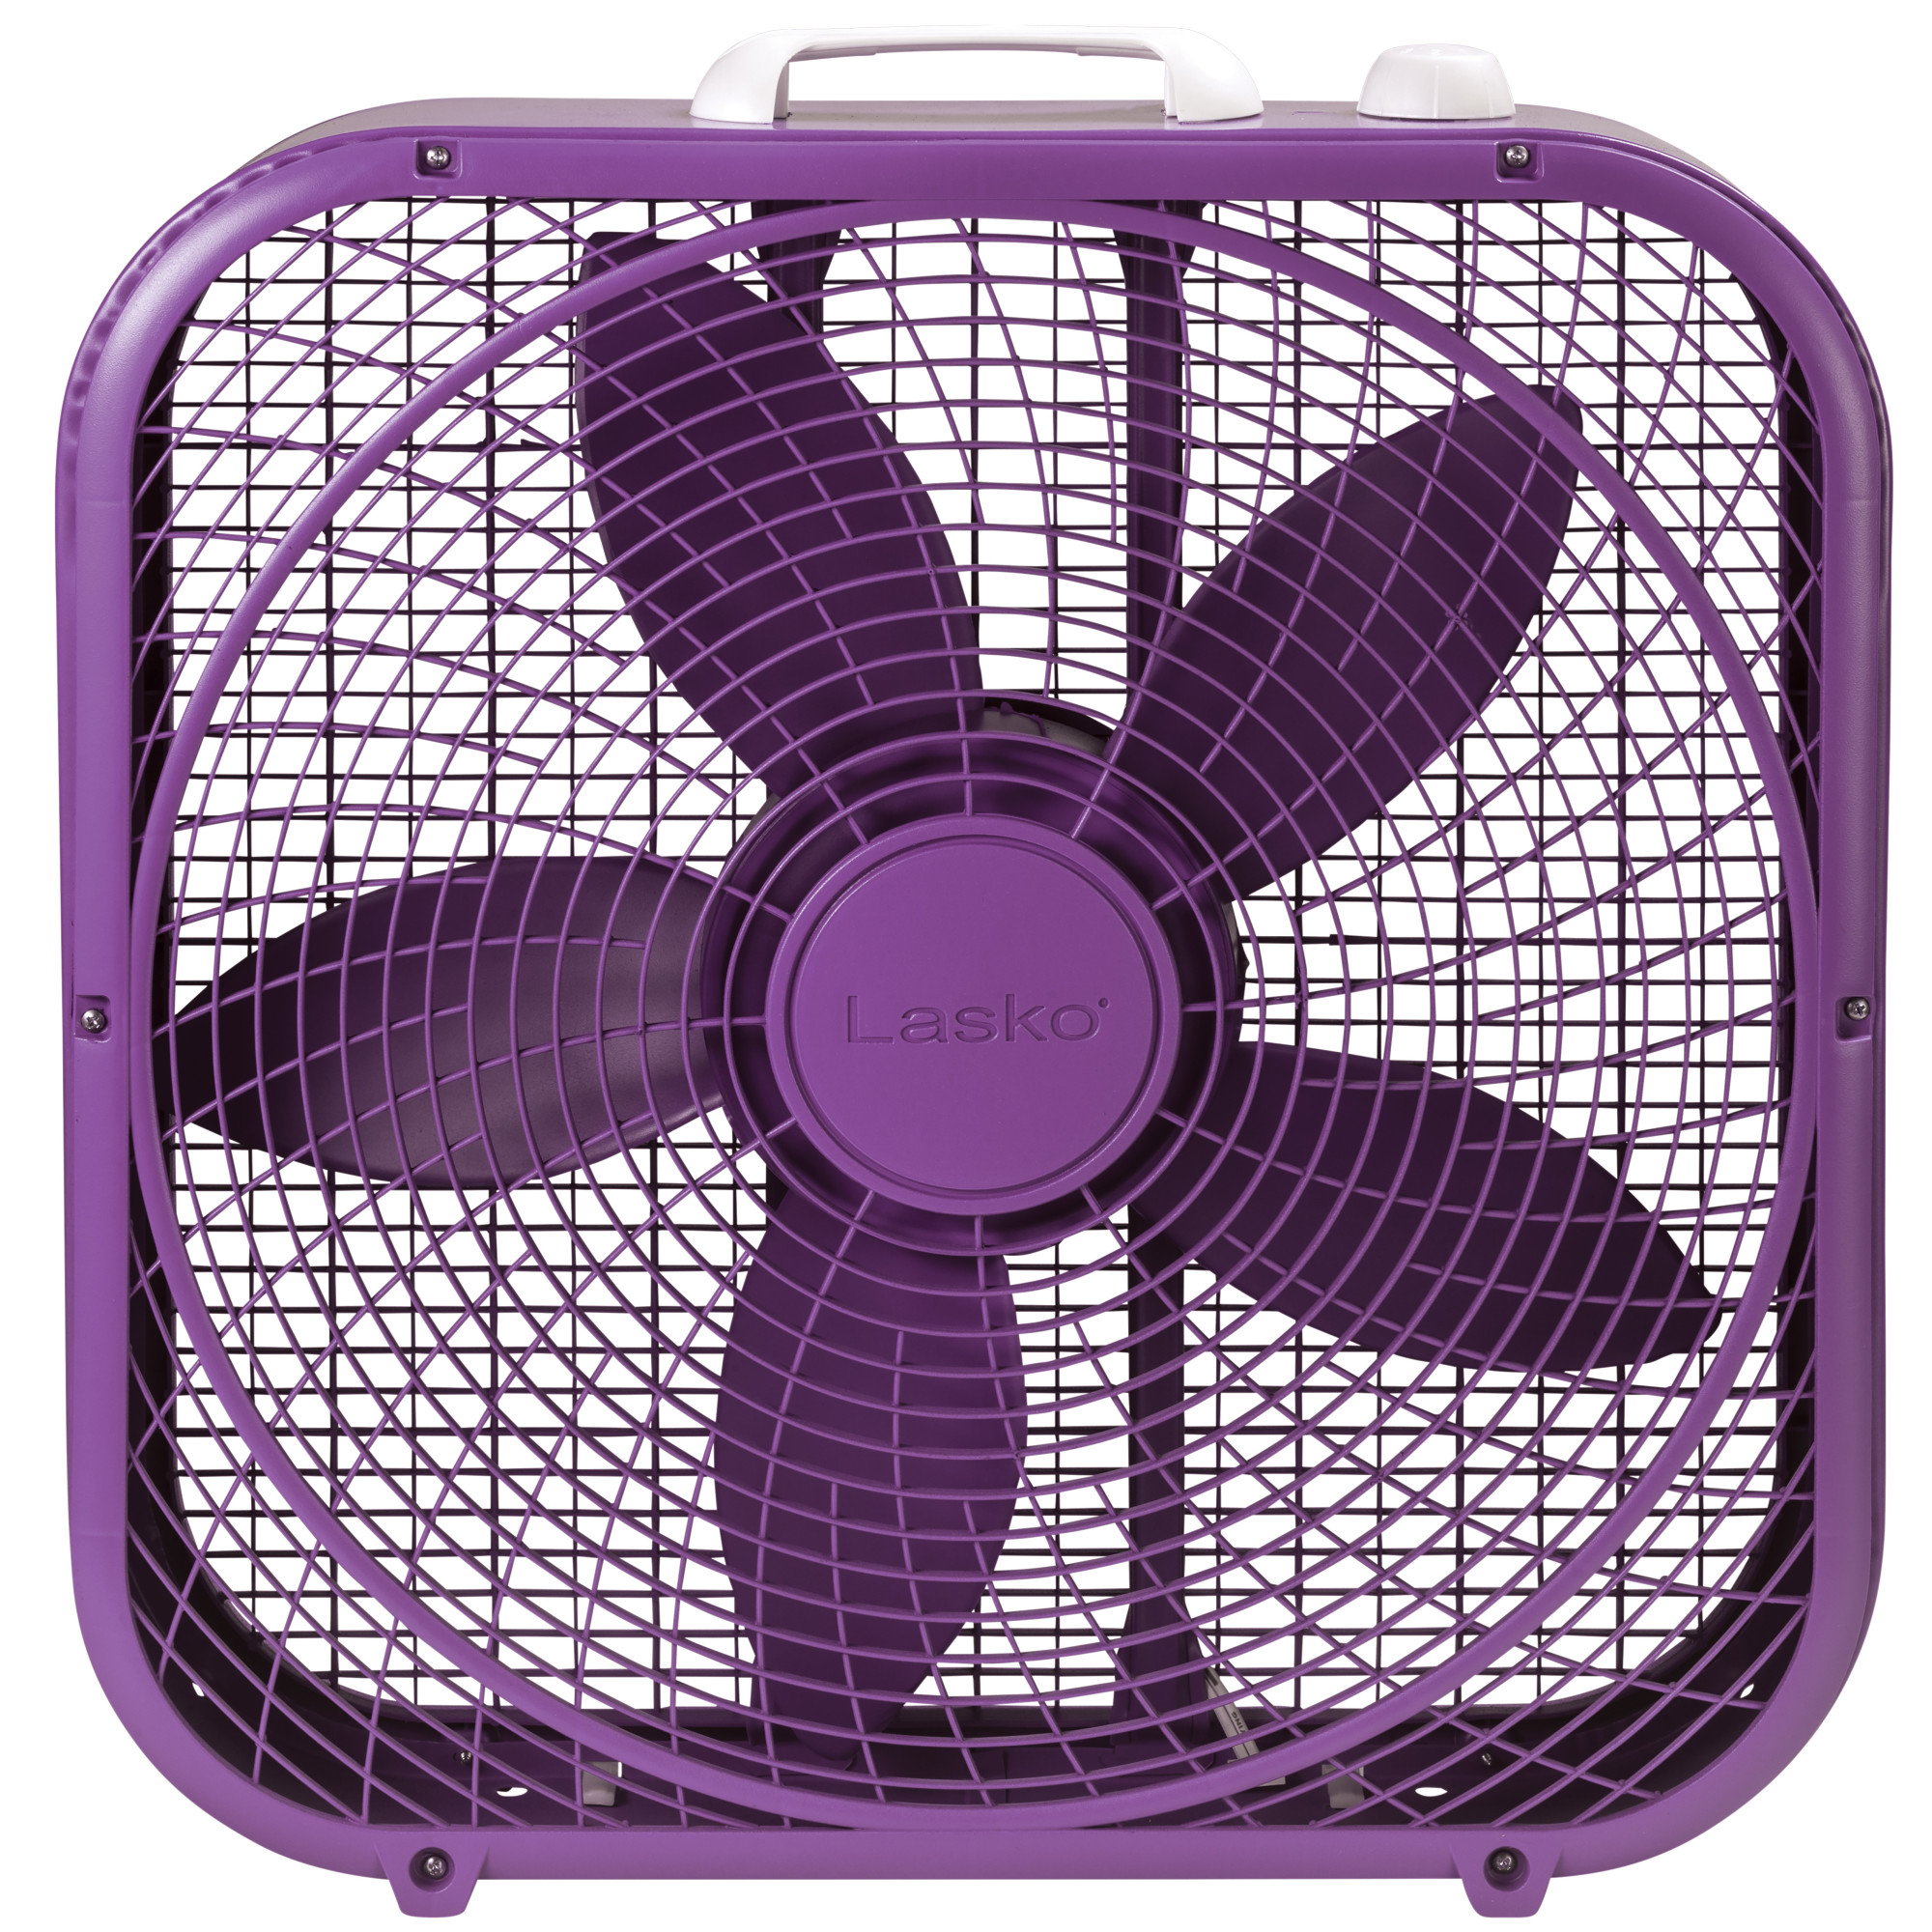 Lasko Cool Colors 20" Energy Efficient Box Fan, 3 Speeds, 22.5" H, Purple, B20309, New - image 2 of 5